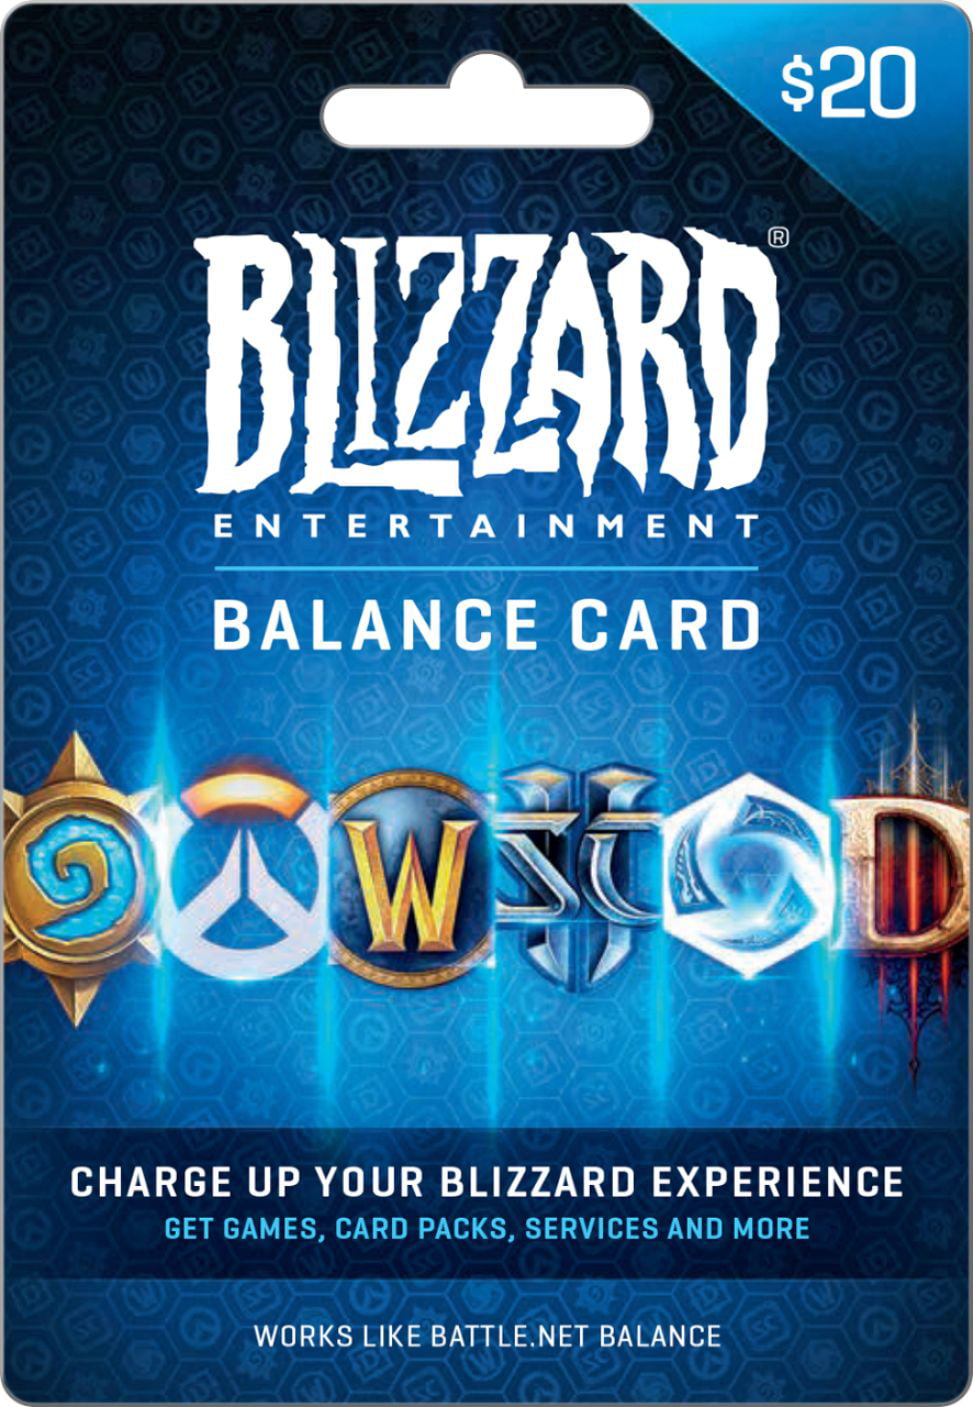 Blizzard Gift Card (PC) Key cheap - Price of $16.40 for Battlenet